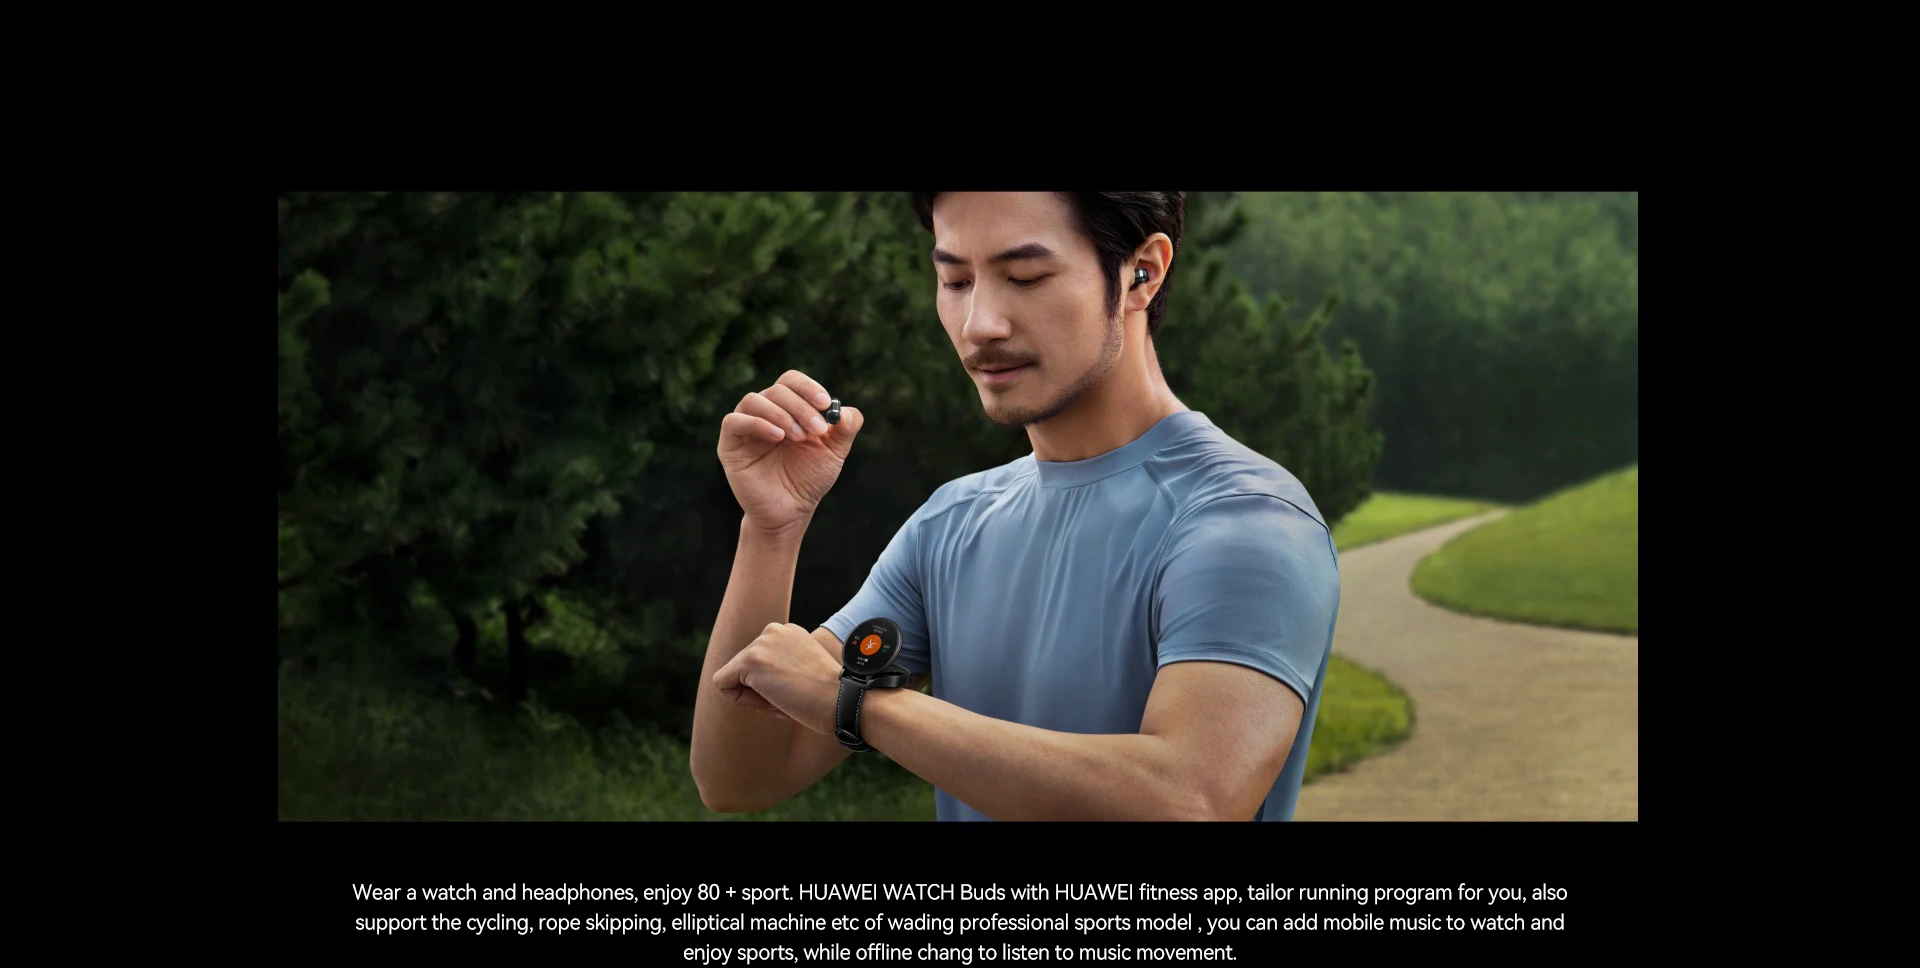 Original HUA WEI WATCH Buds Earphone Watch 2-in-1 Smart Watch Noise Reduction Call Blood Oxygen Monitoring Strong Battery Life